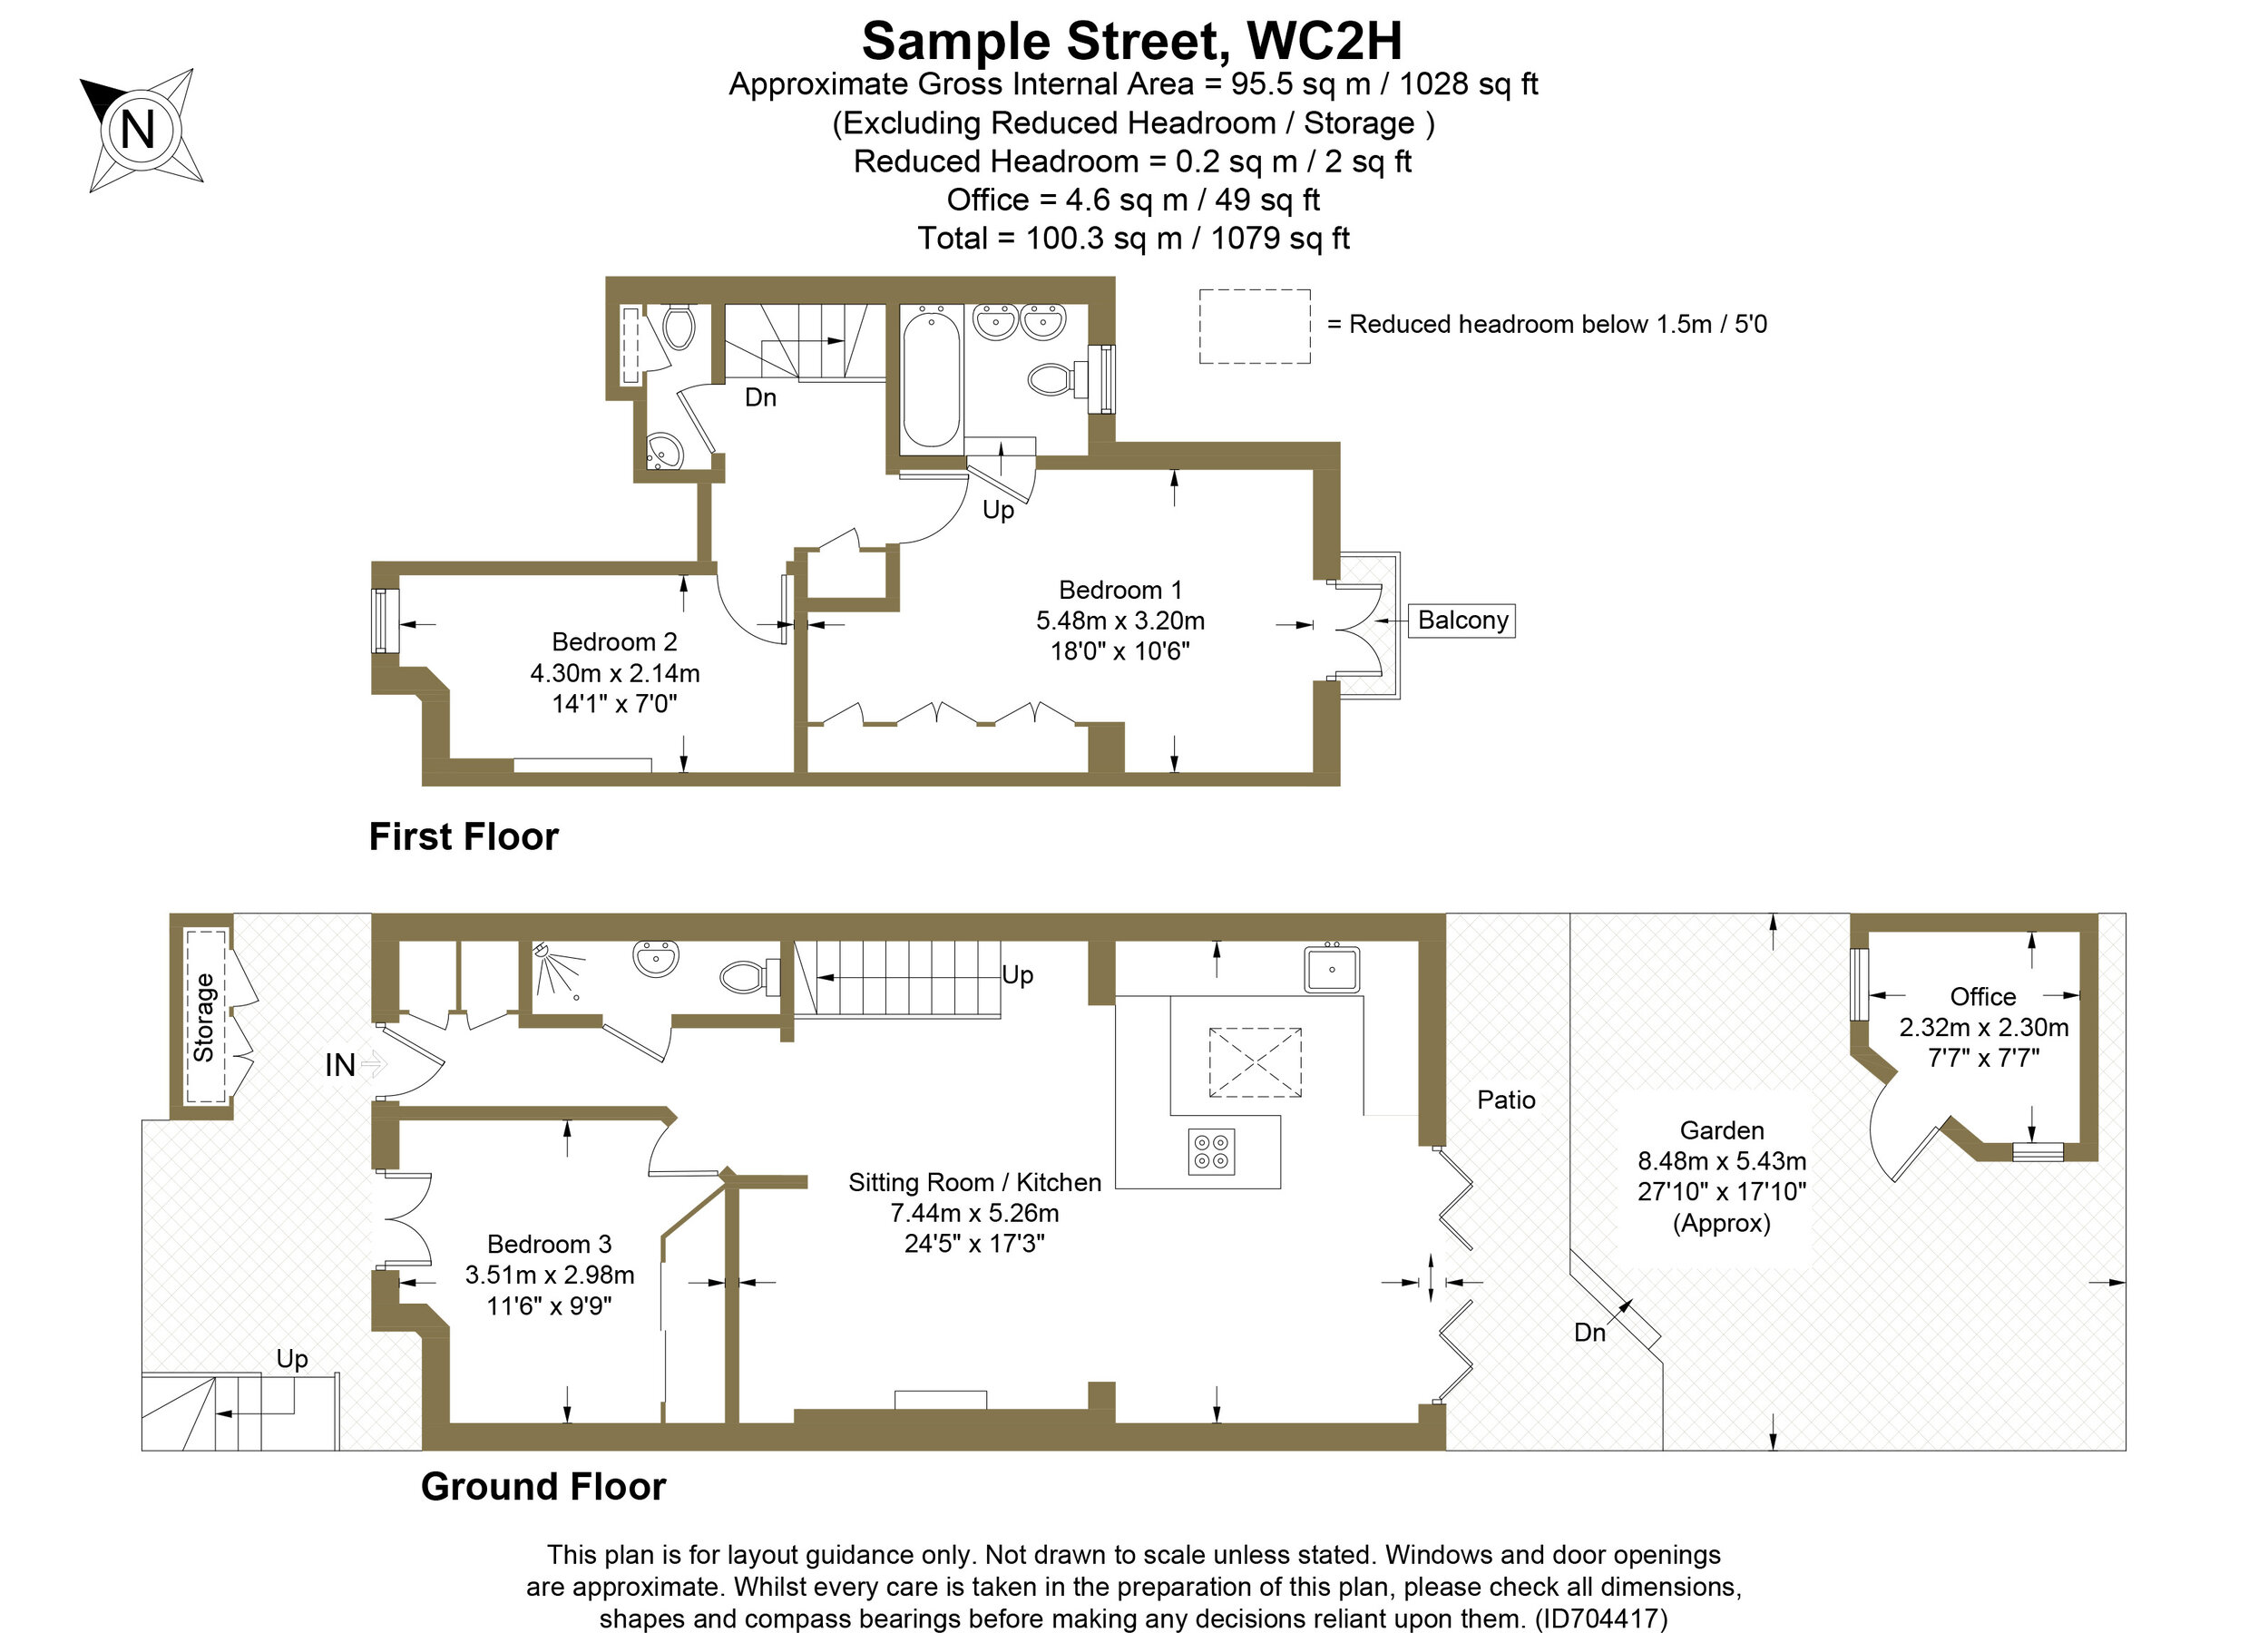 New Sample Floor Plan-2.jpg